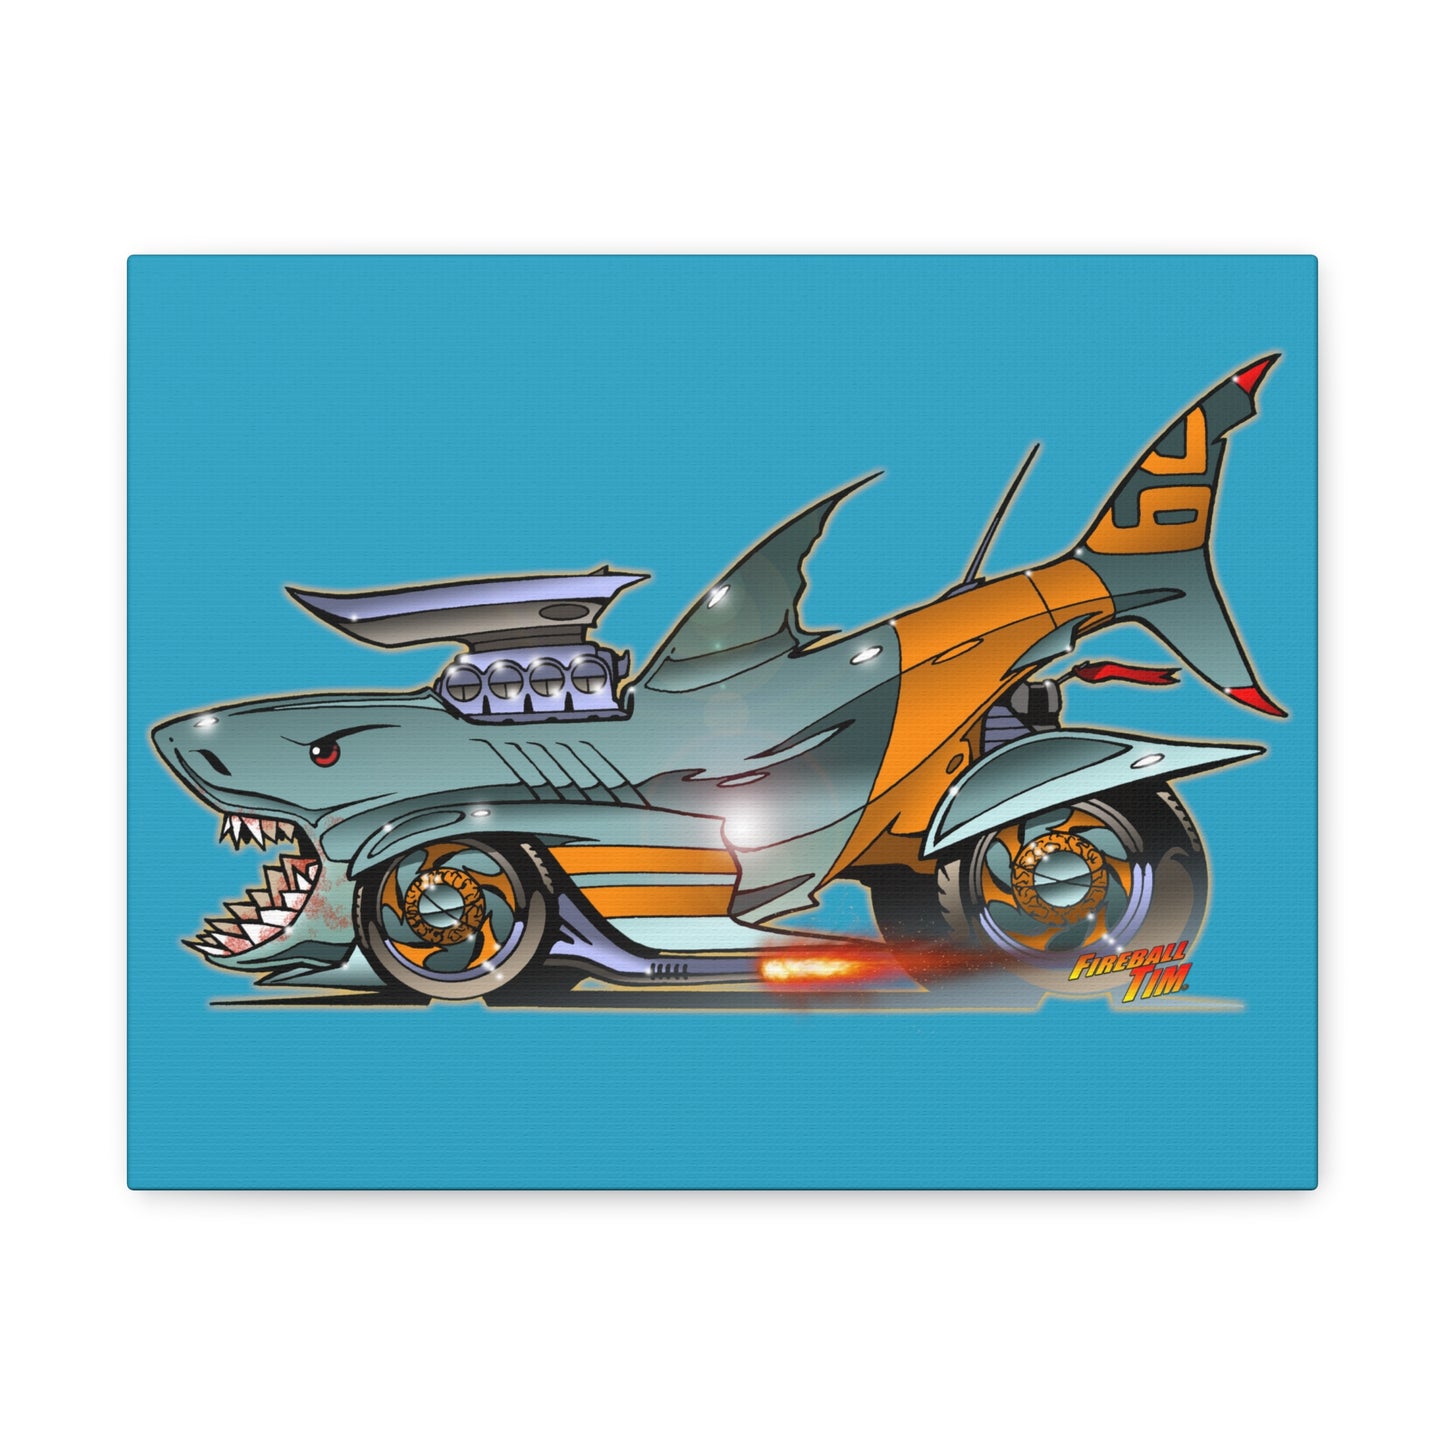 MANEATER GREAT WHITE SHARK Sealife Hot Rod Canvas Gallery Art Print 11x14